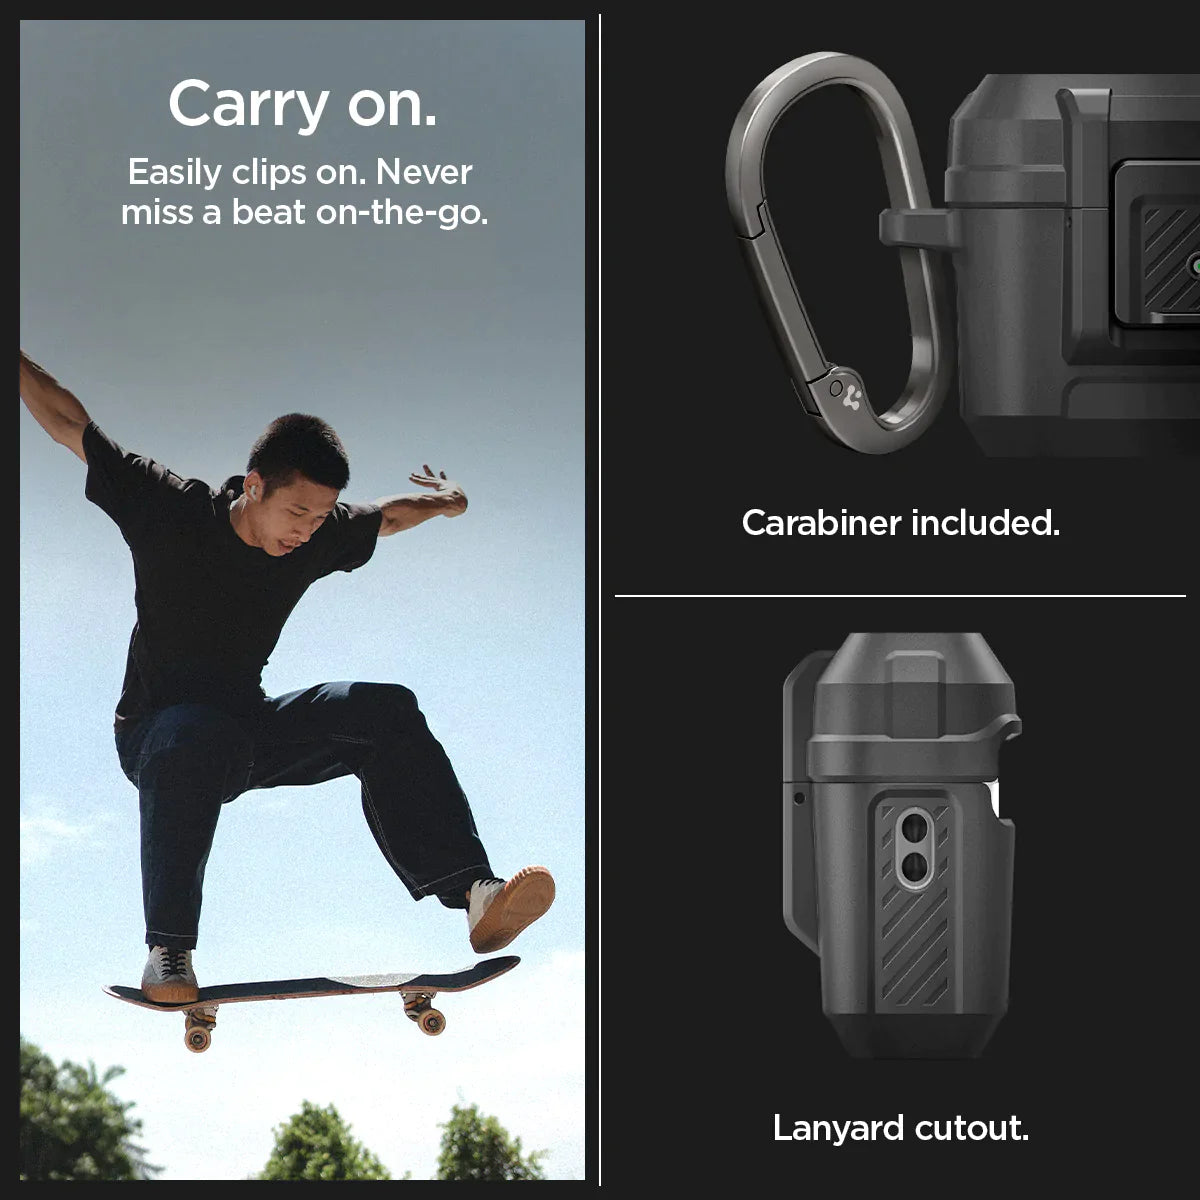 Spigen Lock Fit Case for Apple AirPods Pro 2  -  Matte Black